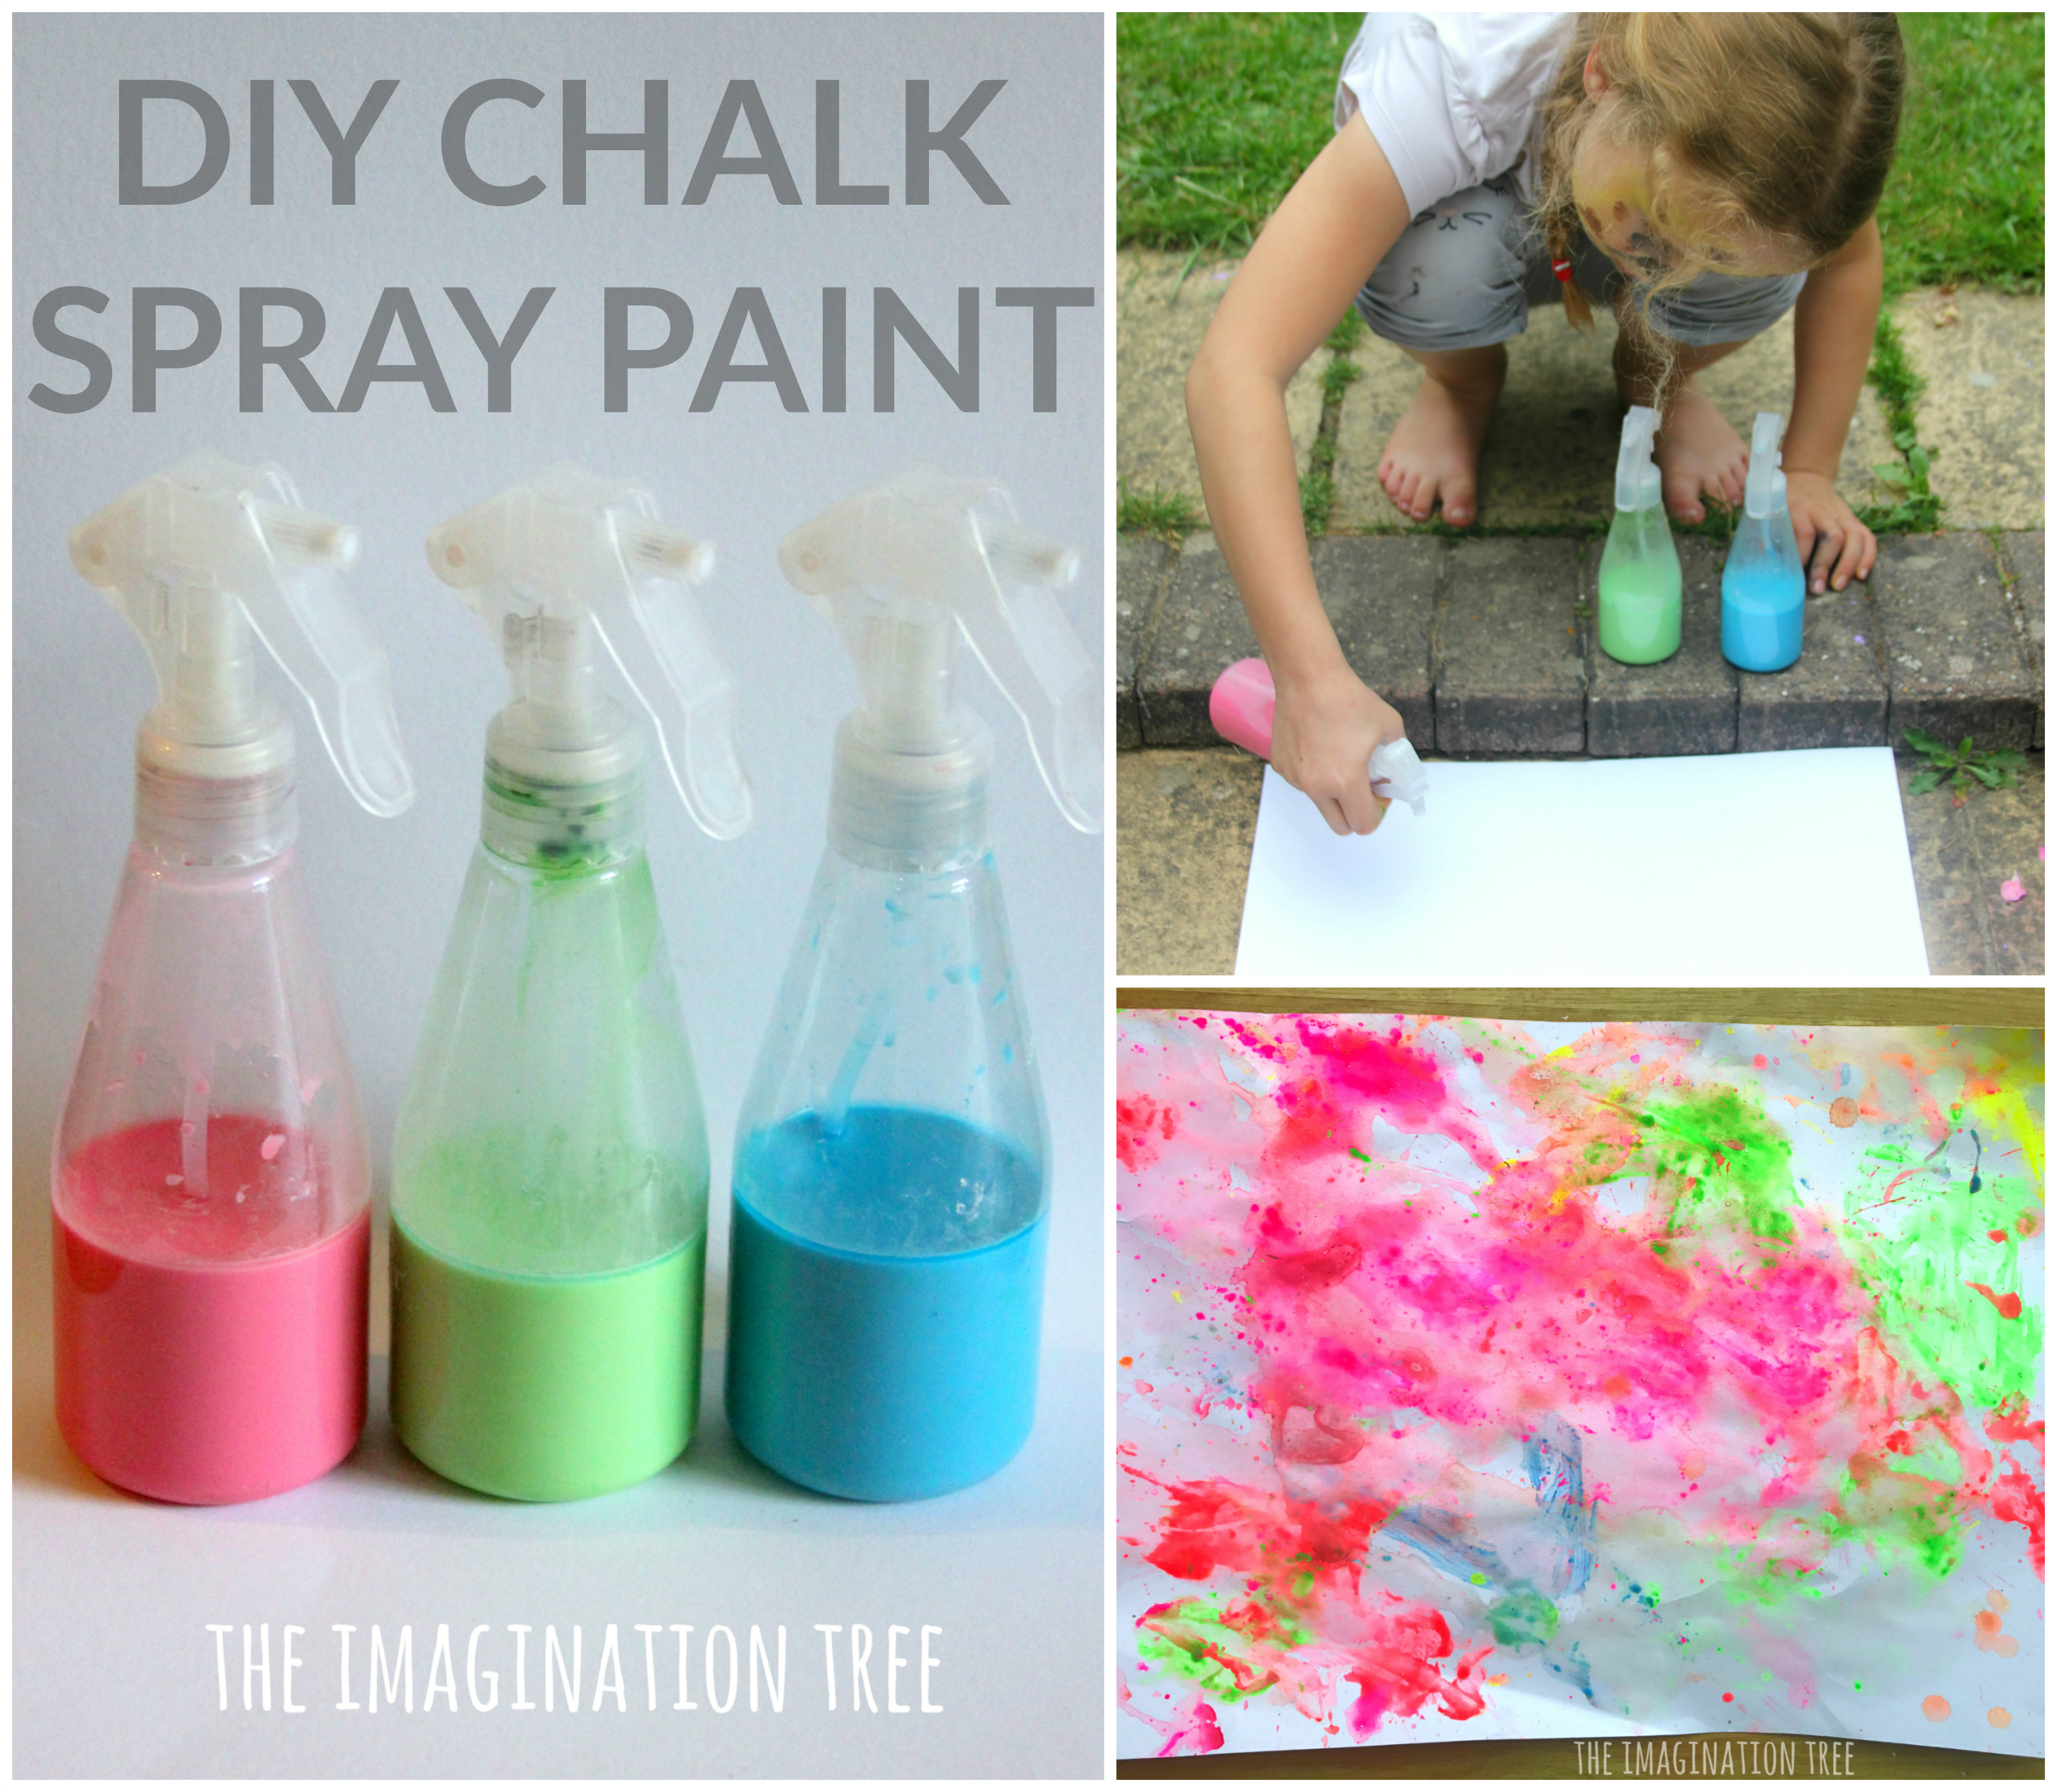 DIY Chalk Spray Paint Recipe - The Imagination Tree